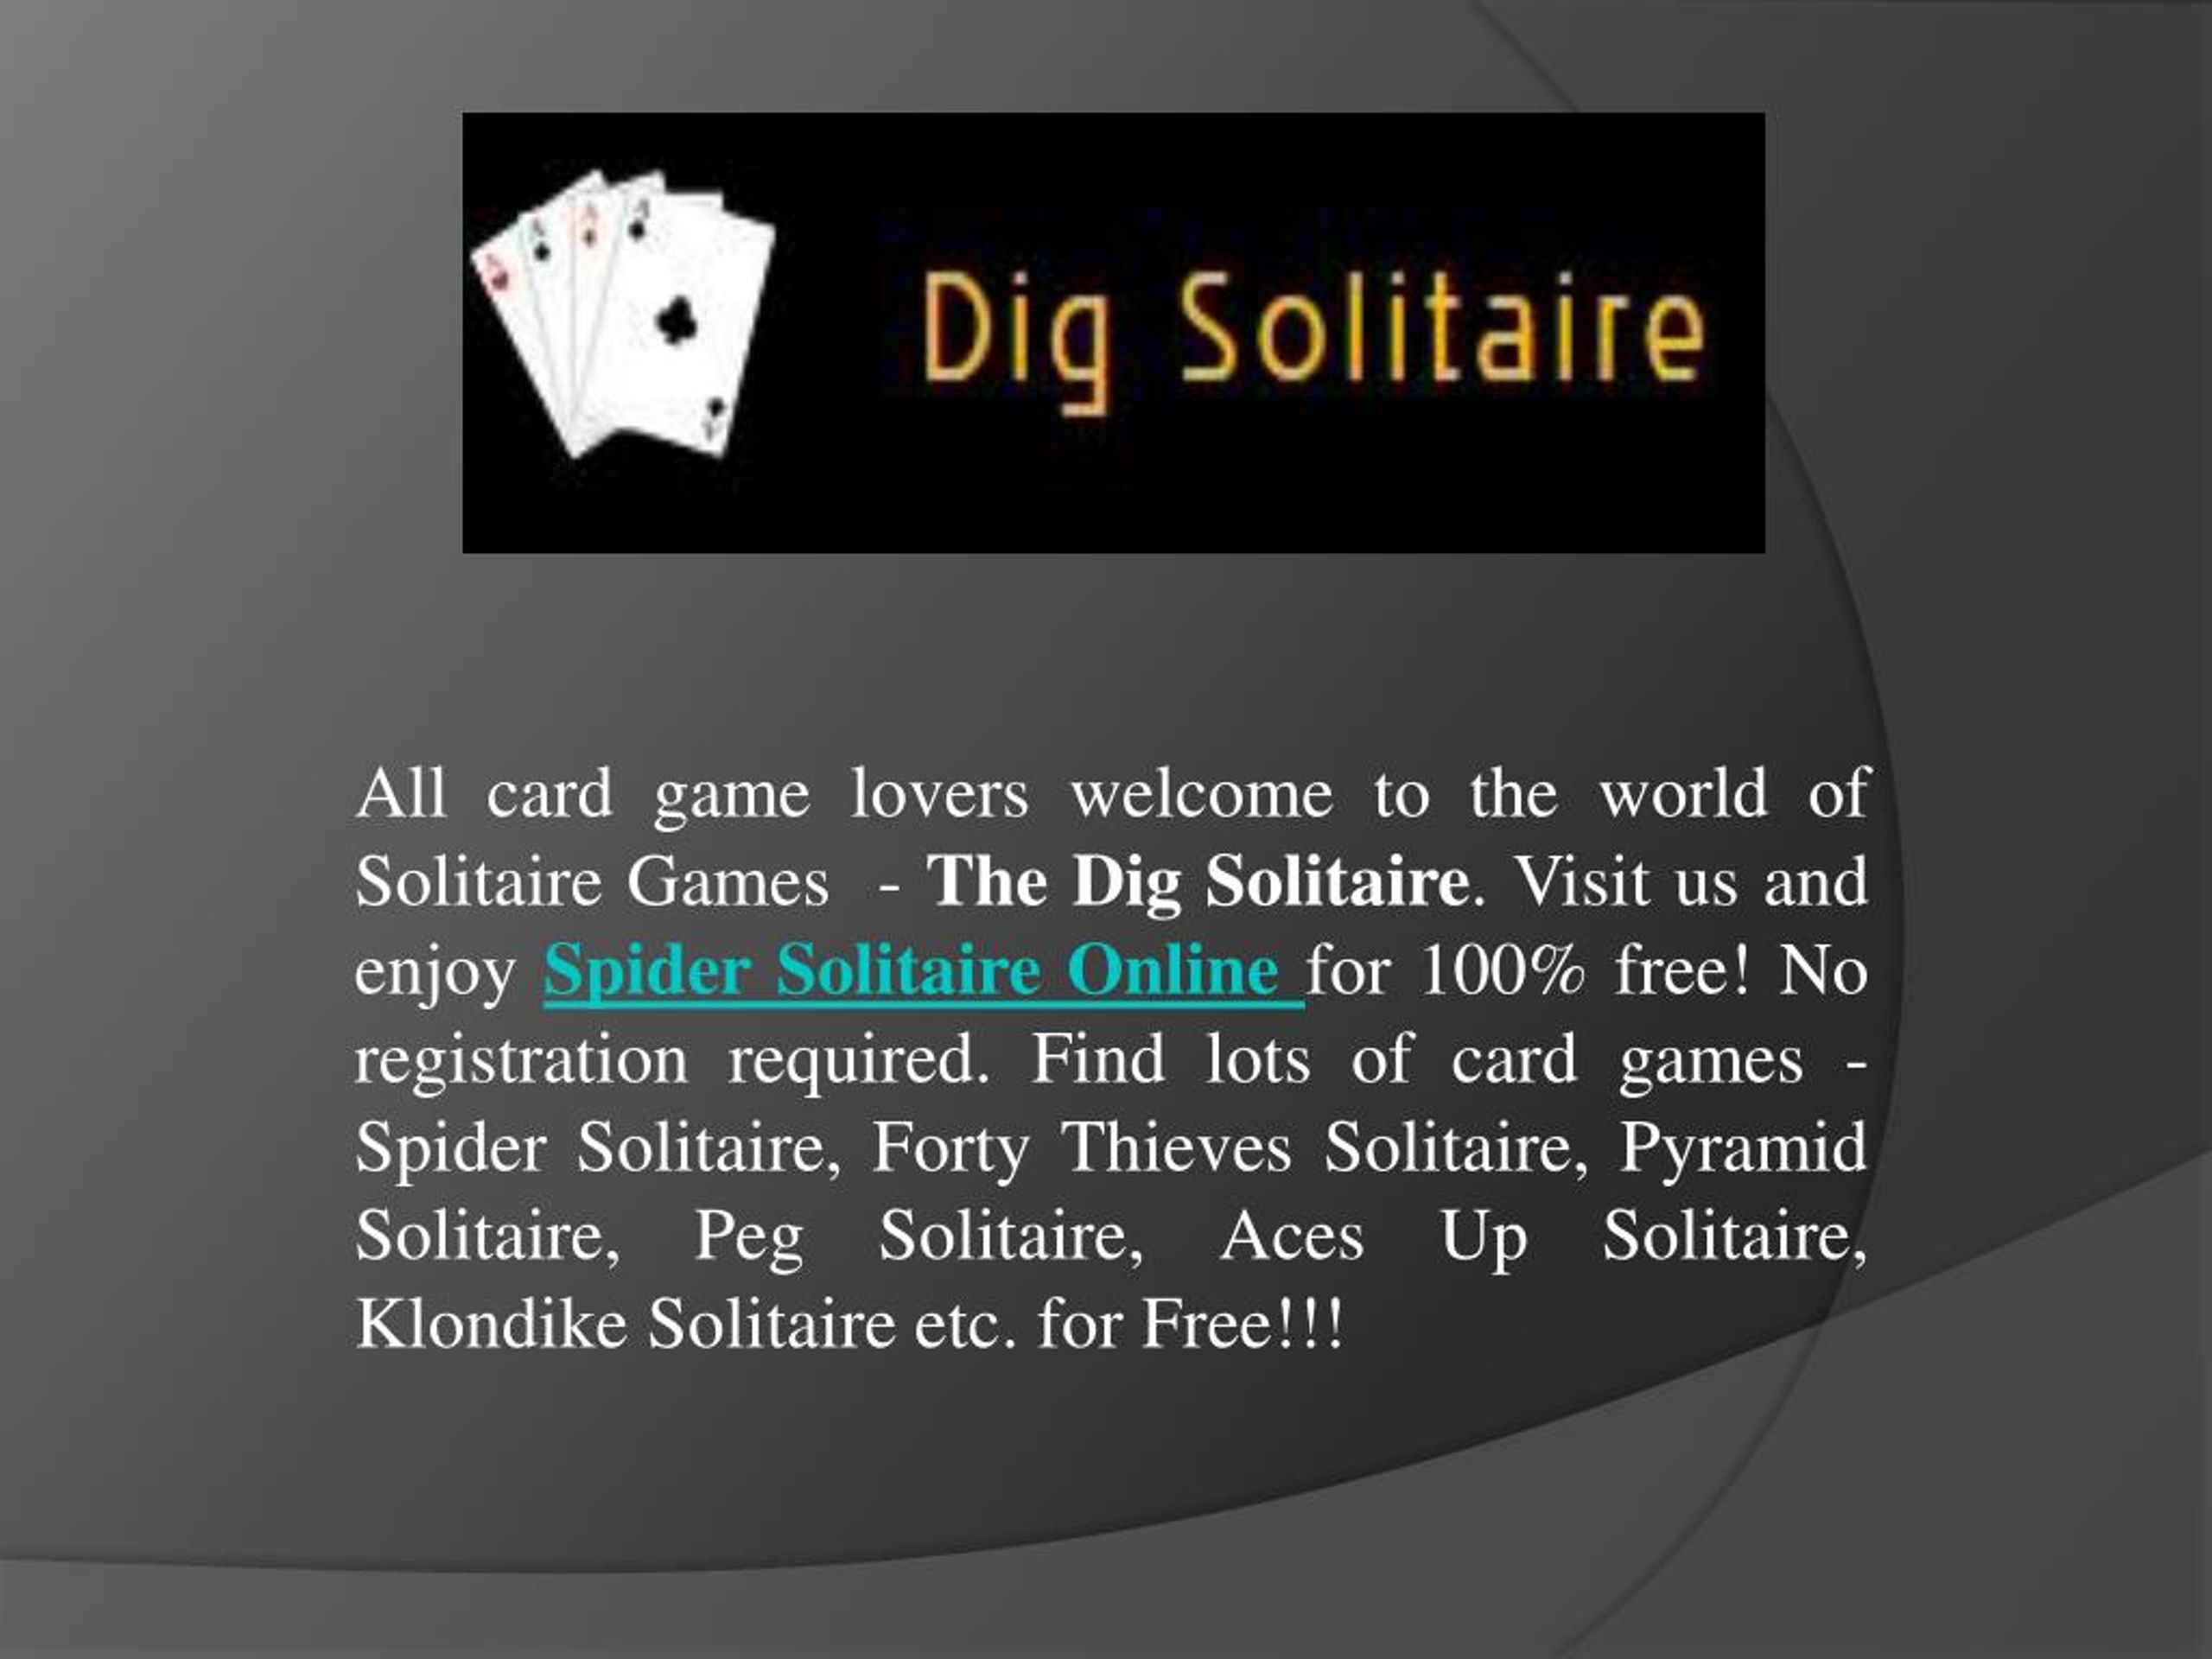 Klondike Solitaire - Play Online & 100% Free